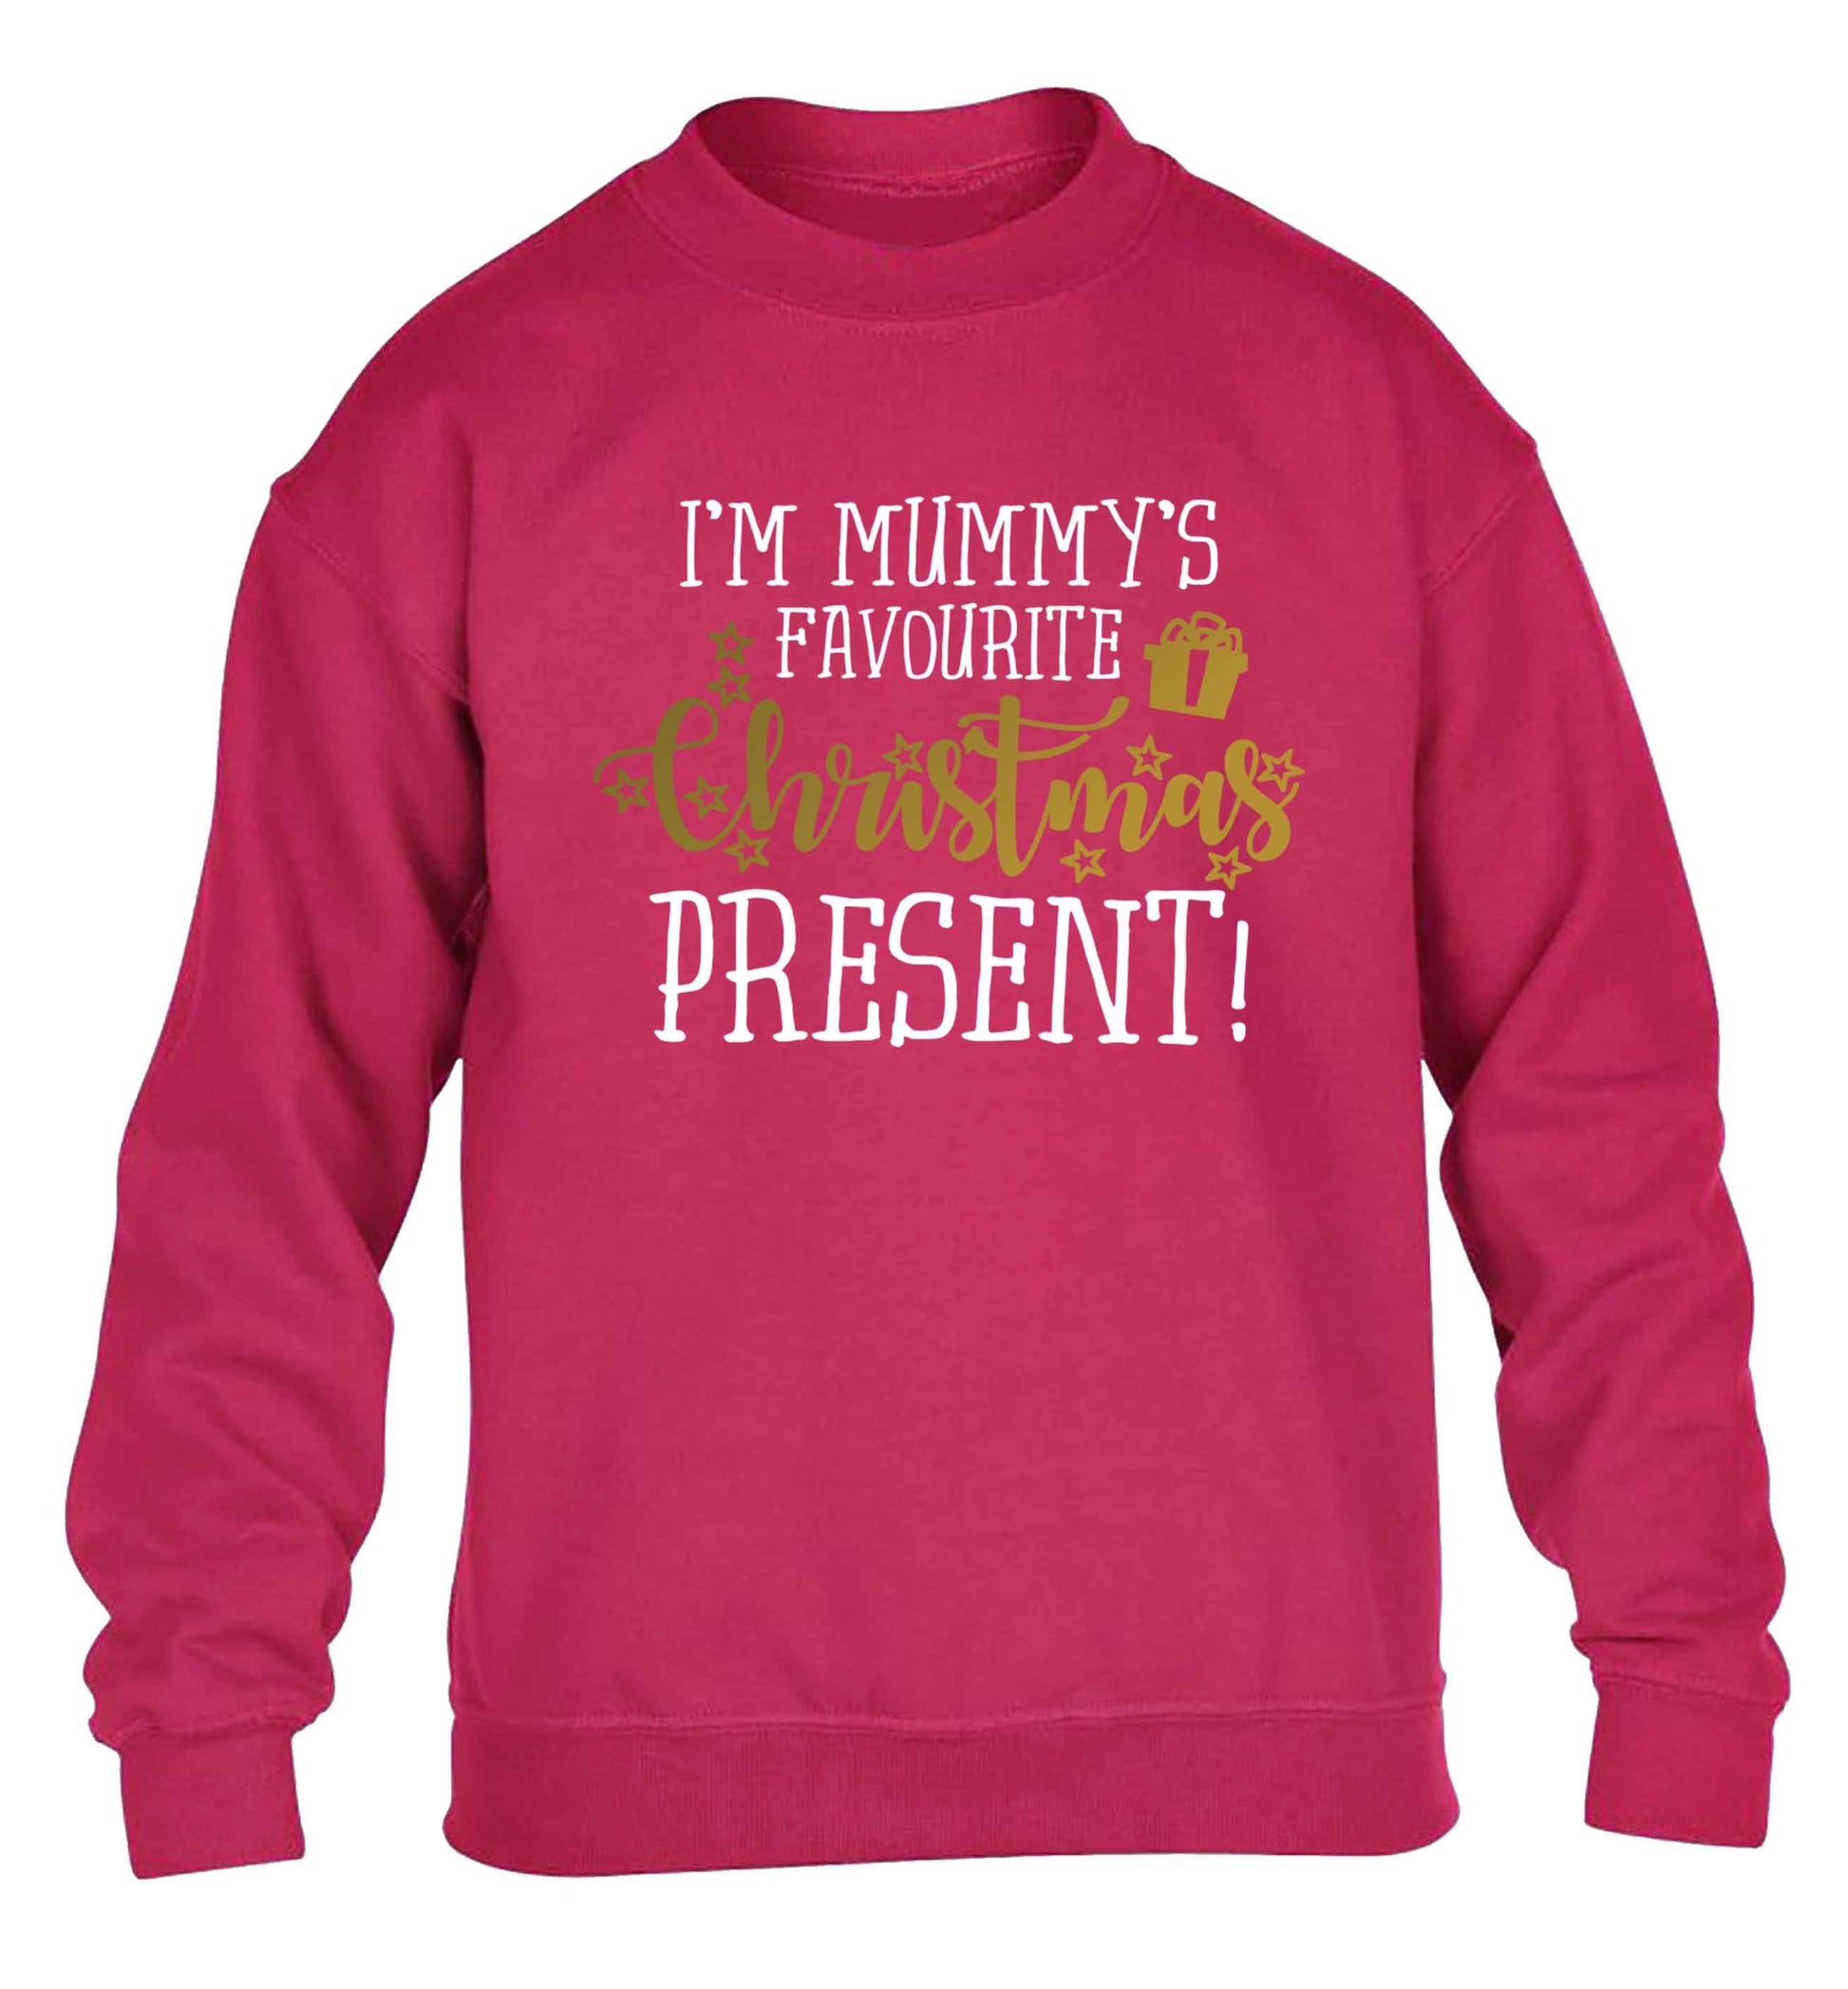 I'm Mummy's favourite Christmas present children's pink sweater 12-13 Years